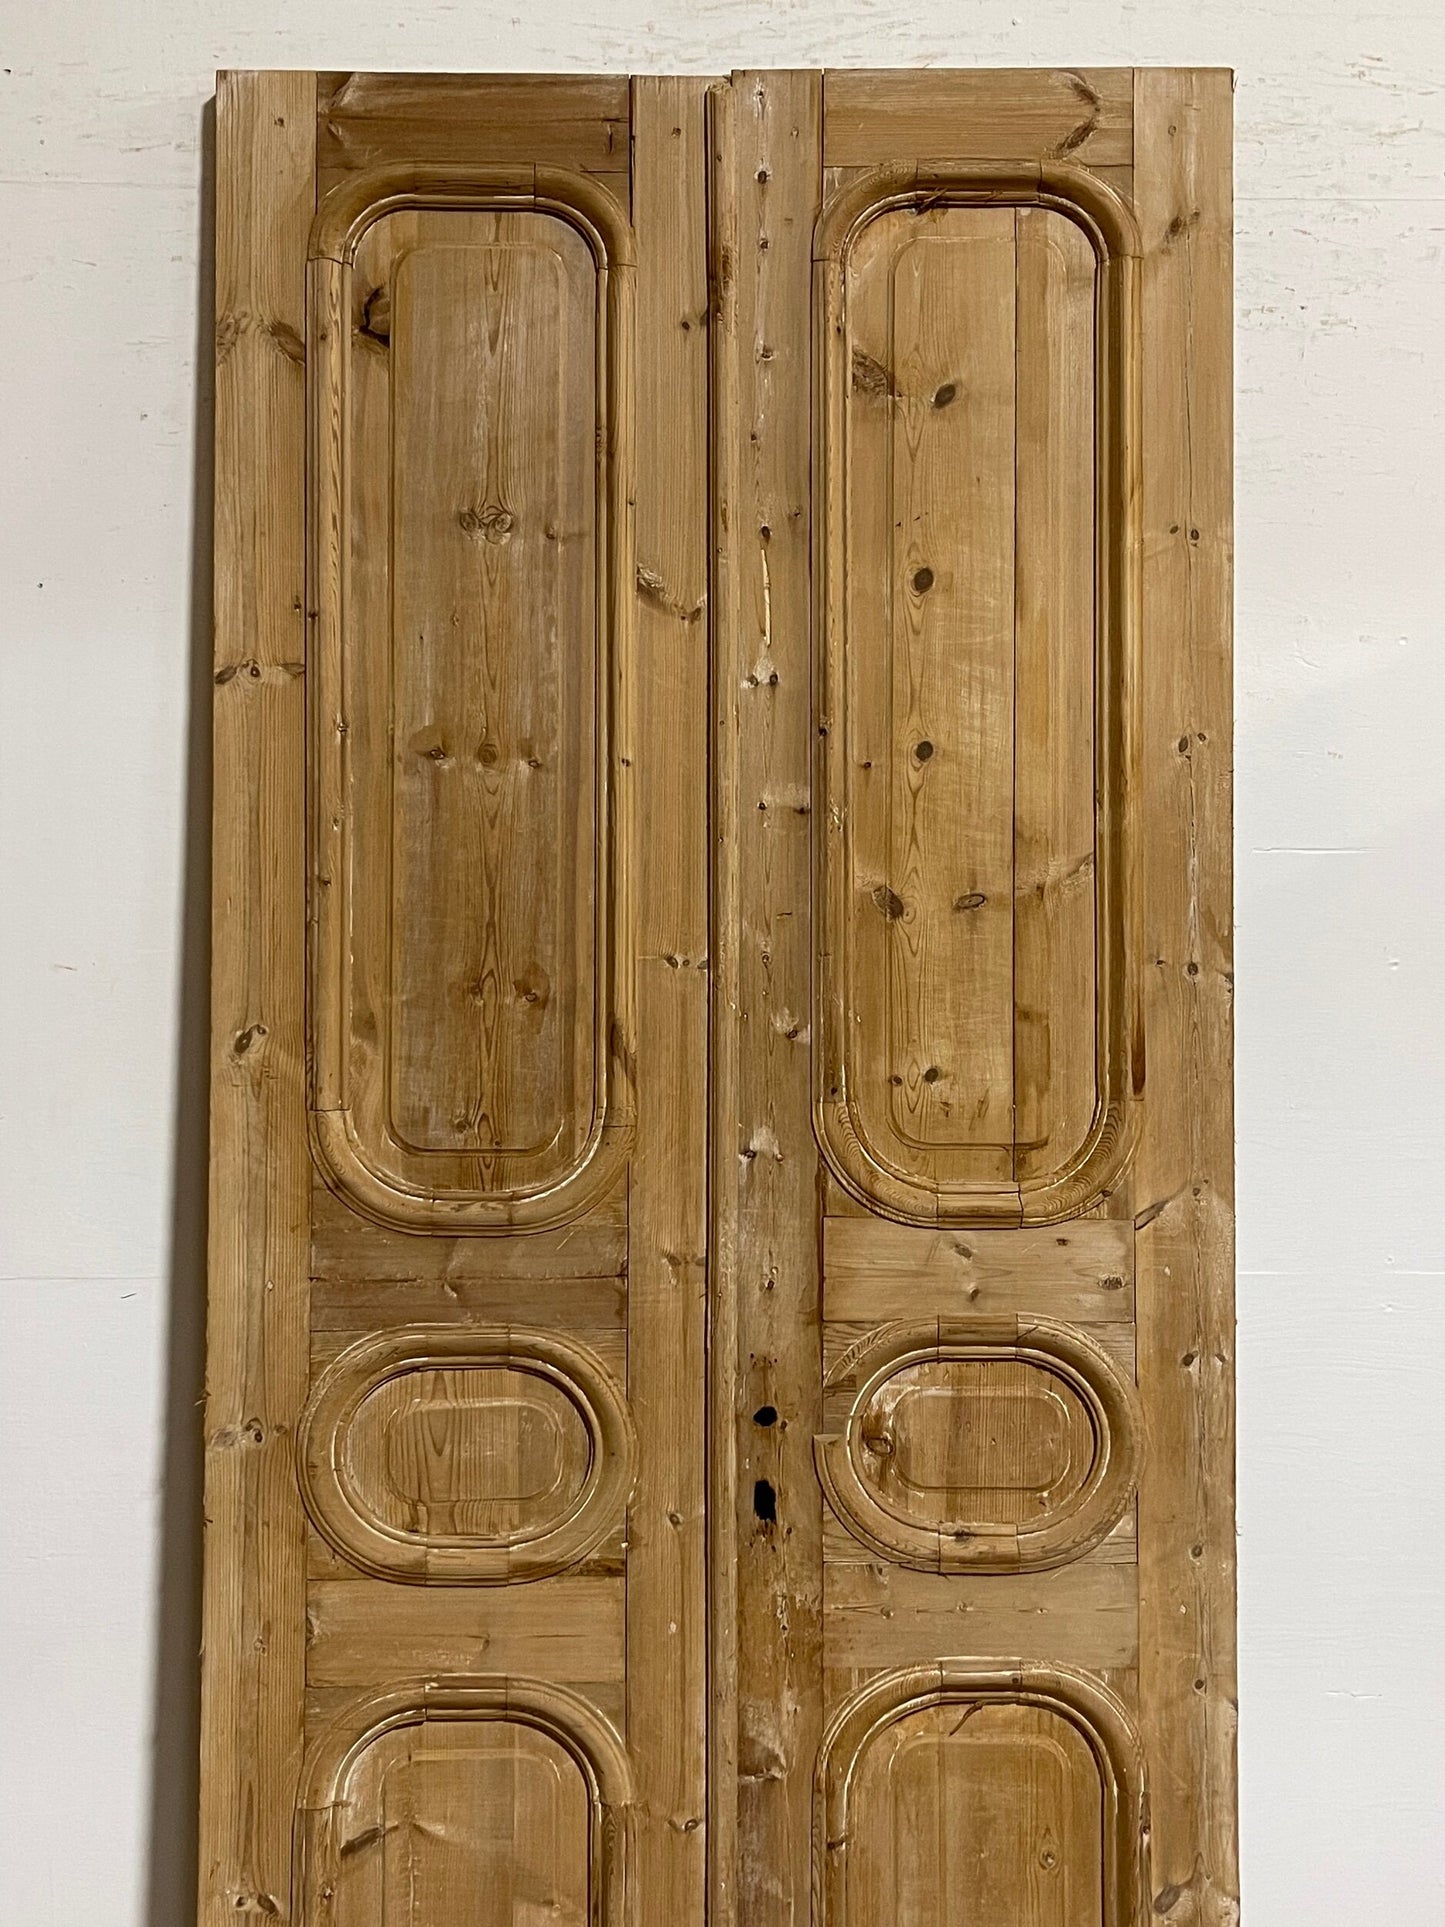 Antique French panel doors (101 x 43.75)  I060